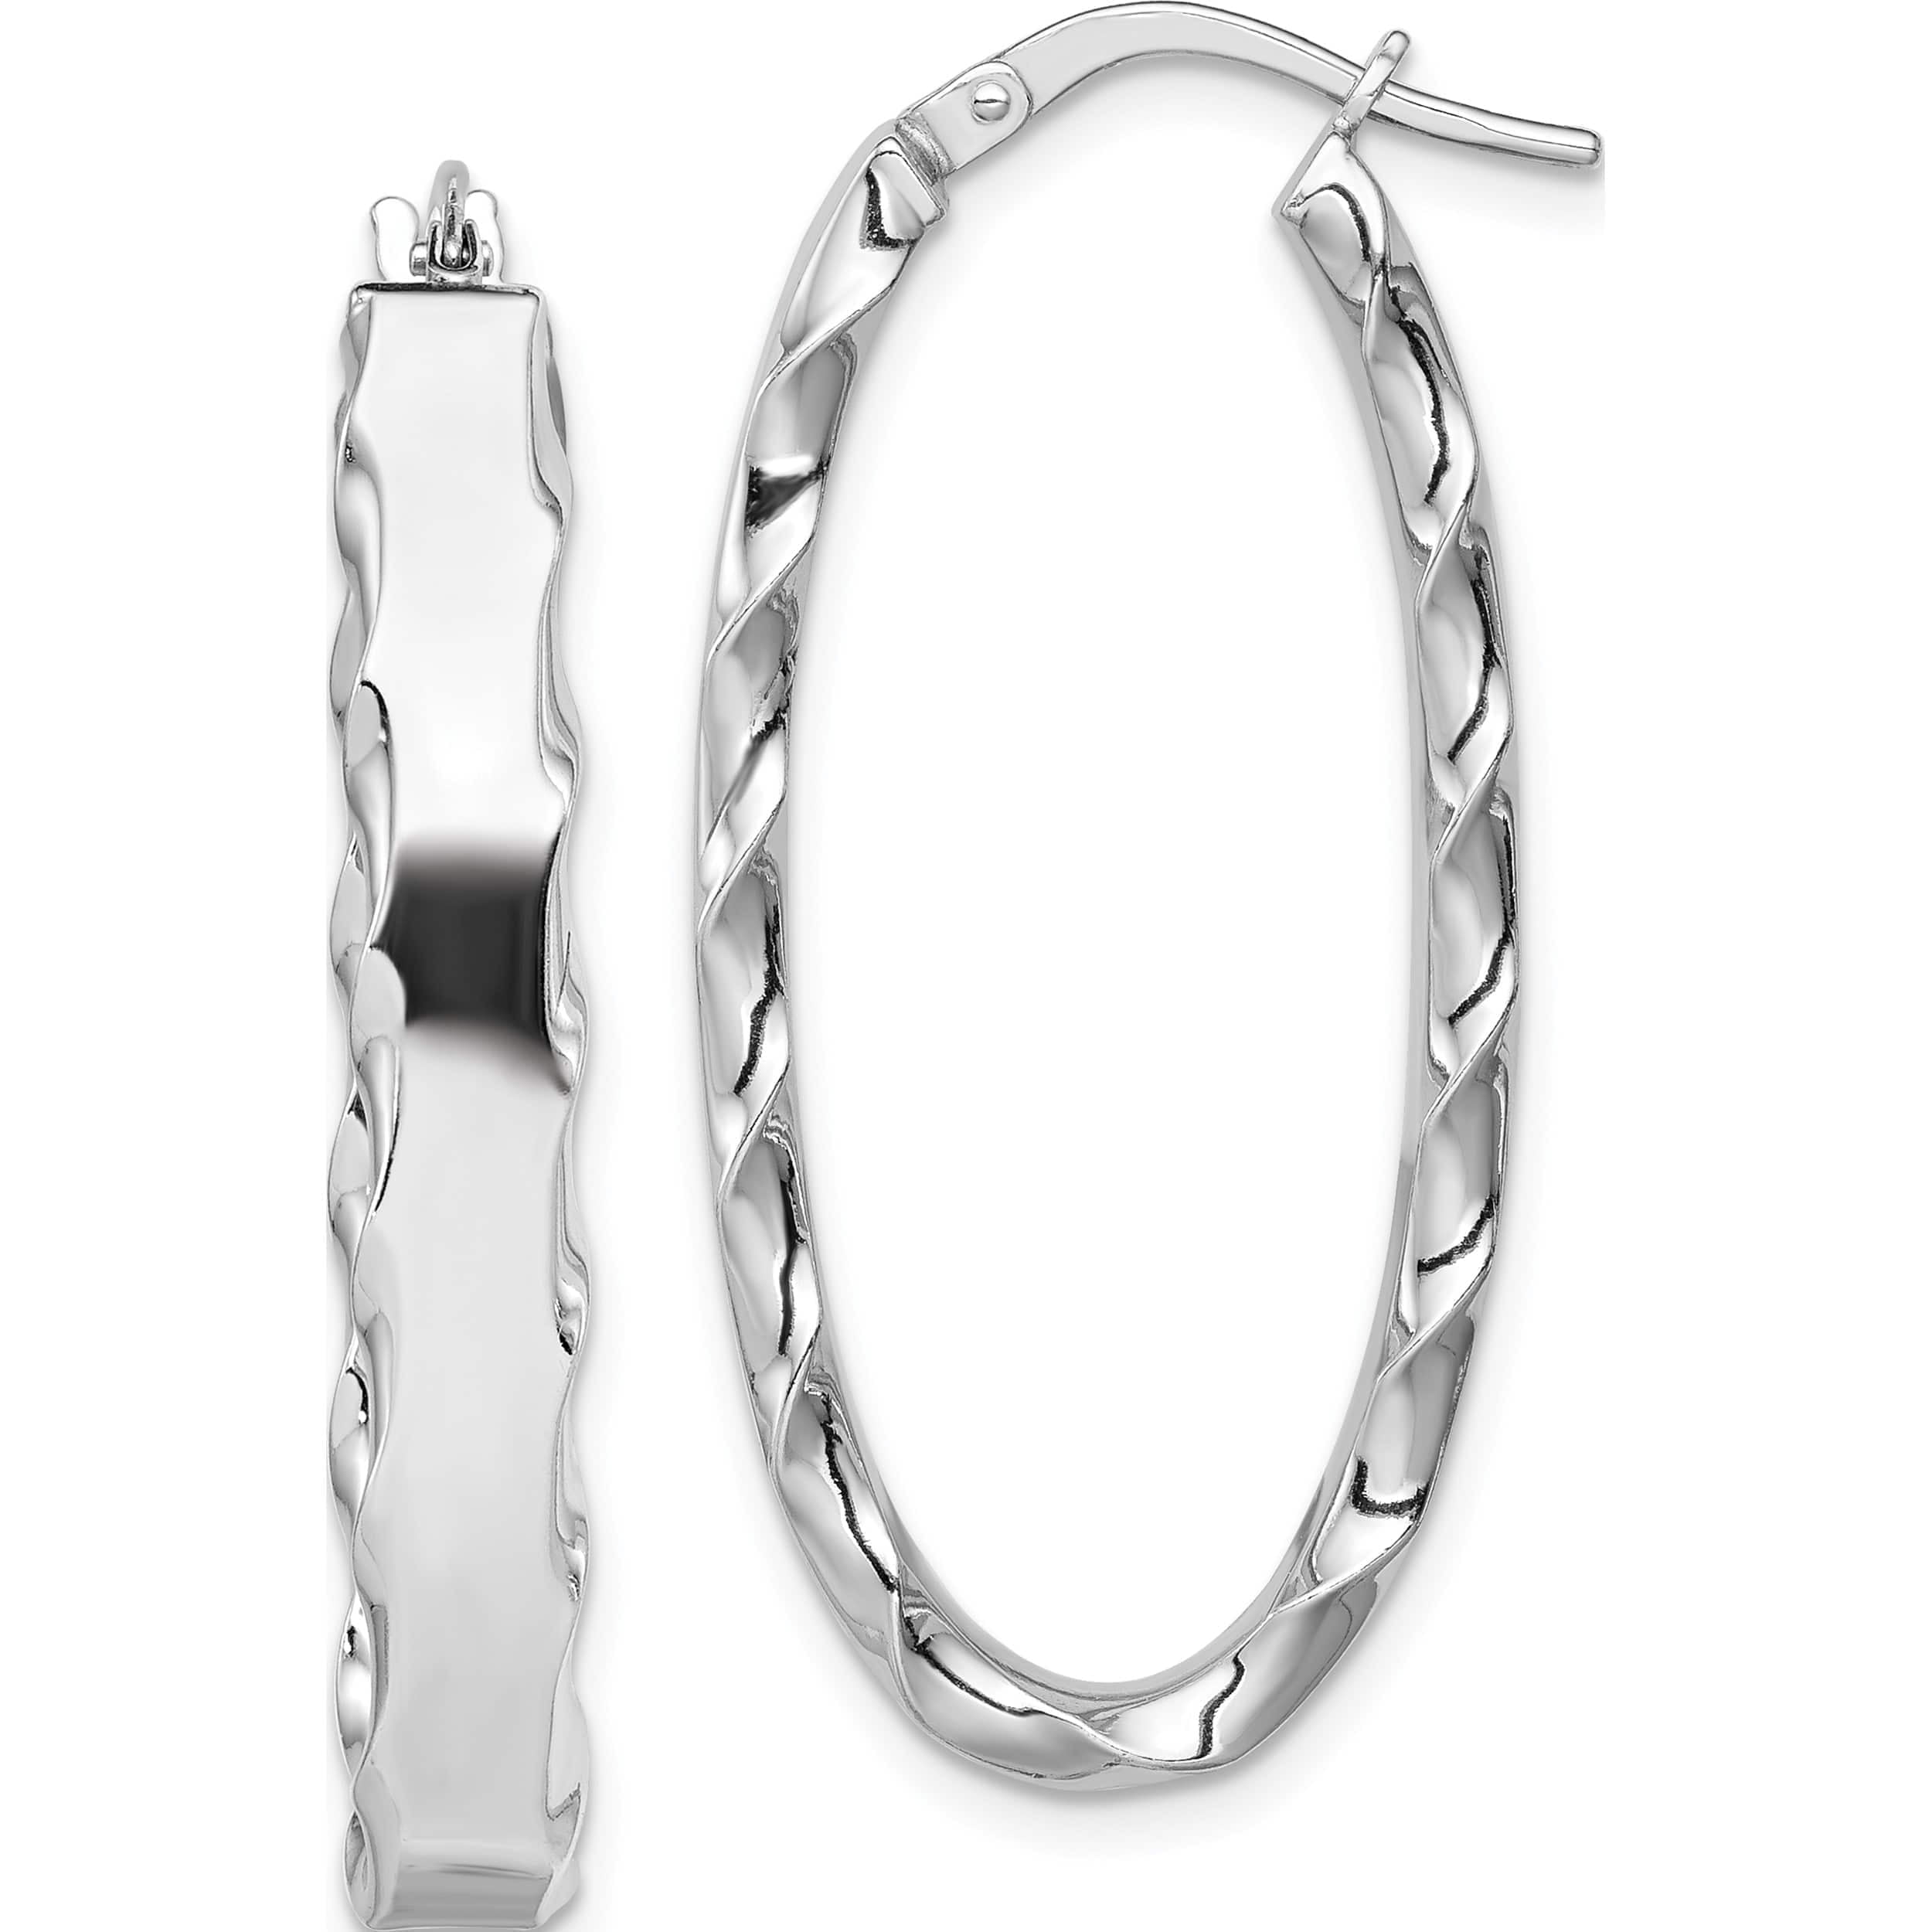 Beautiful Sterling Silver RH-plated Oval Scalloped Edge 5mm Hoop Earrings